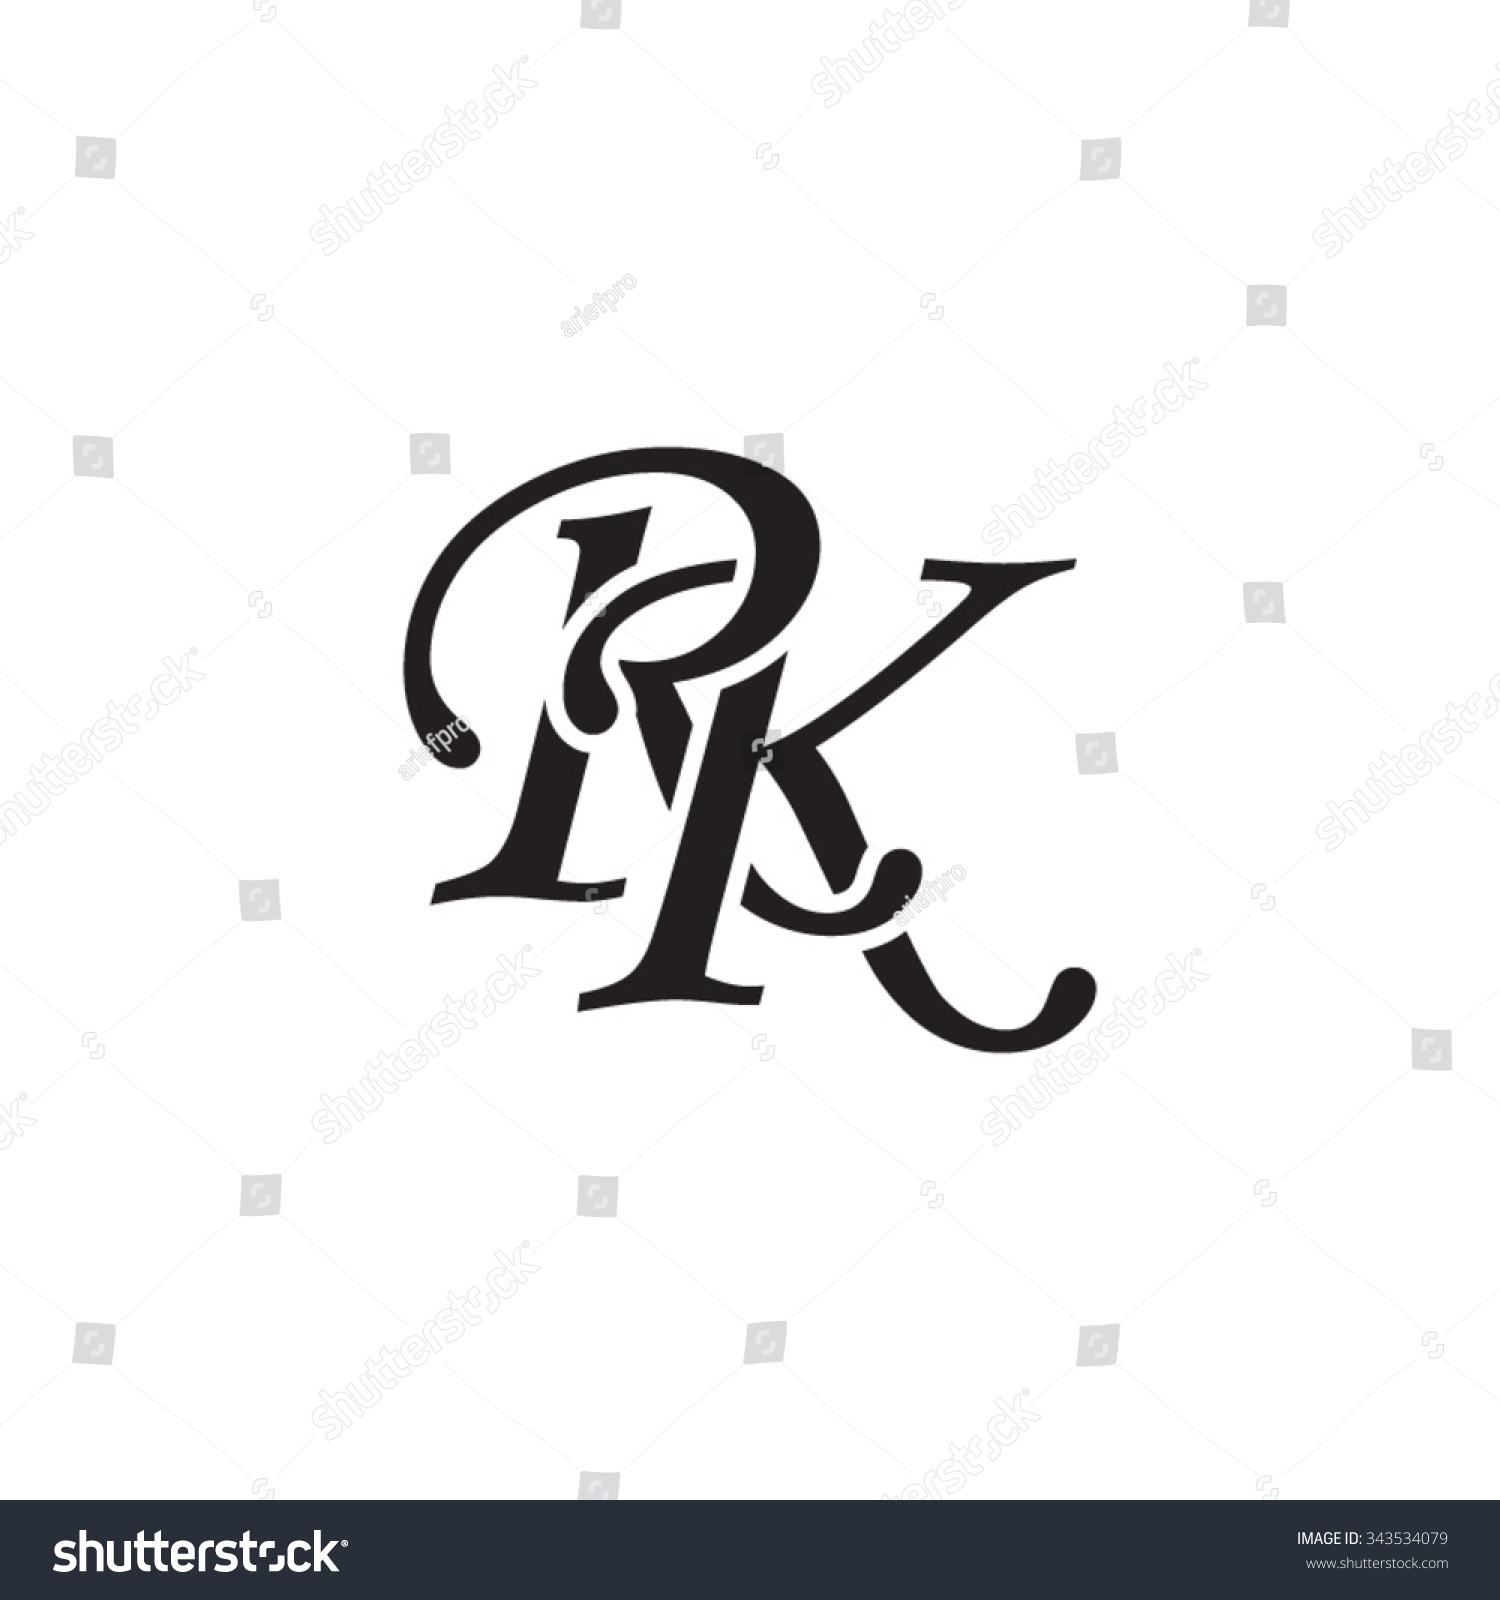 Rk Initial Monogram Logo Stock Vector 343534079 : Shutterstock